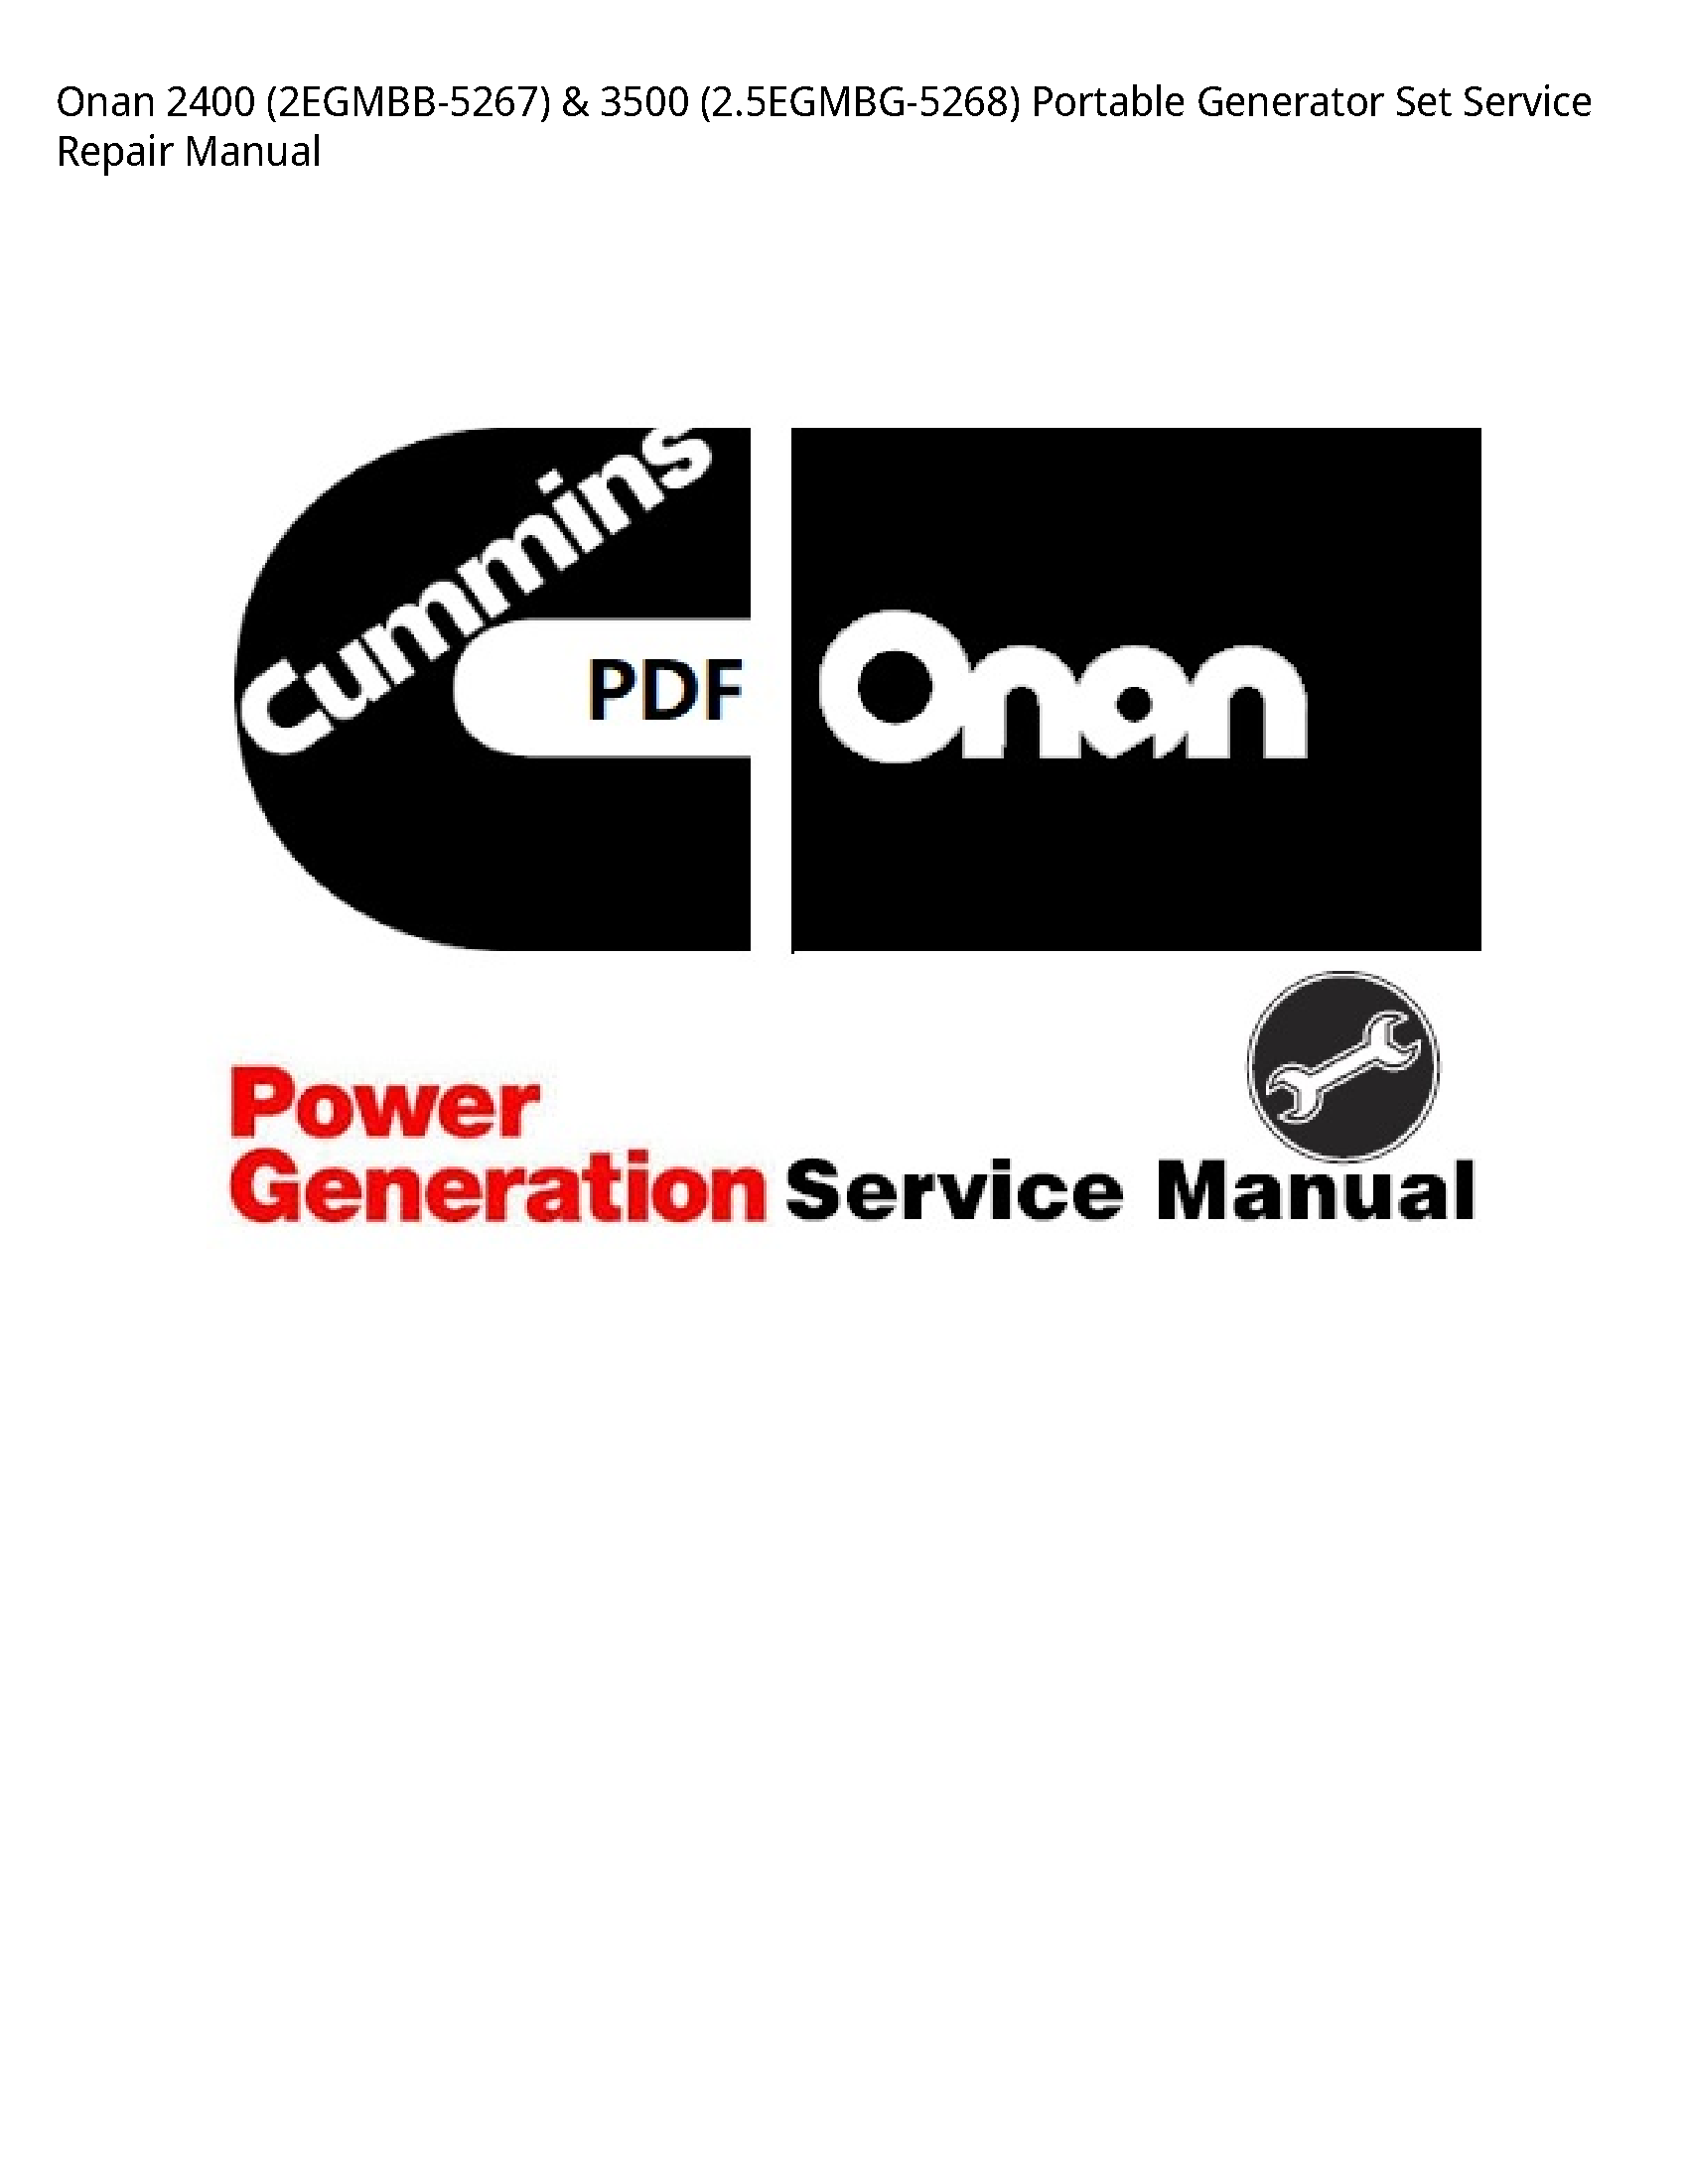 Onan 2400 Portable Generator Set manual